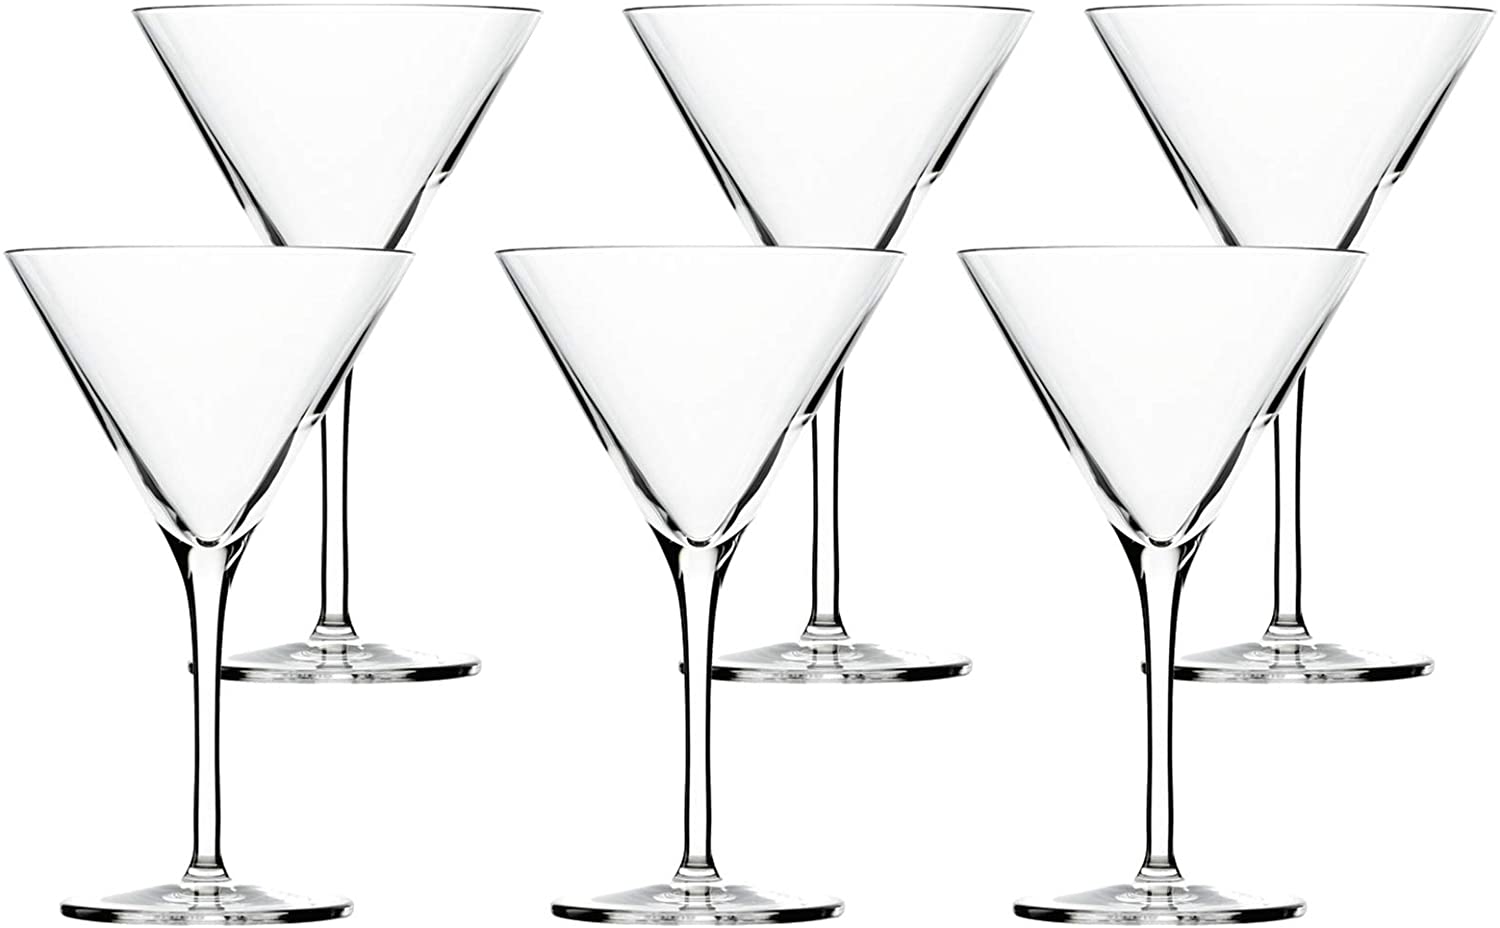 STÖLZLE LAUSITZ Cocktail Bowl Professional 250 ml I Martini Glasses Set of 6 I Crystal Clear I Cocktail Glasses Dishwasher Safe & Shatterproof I High Quality Crystal Glass I Martini Glasses